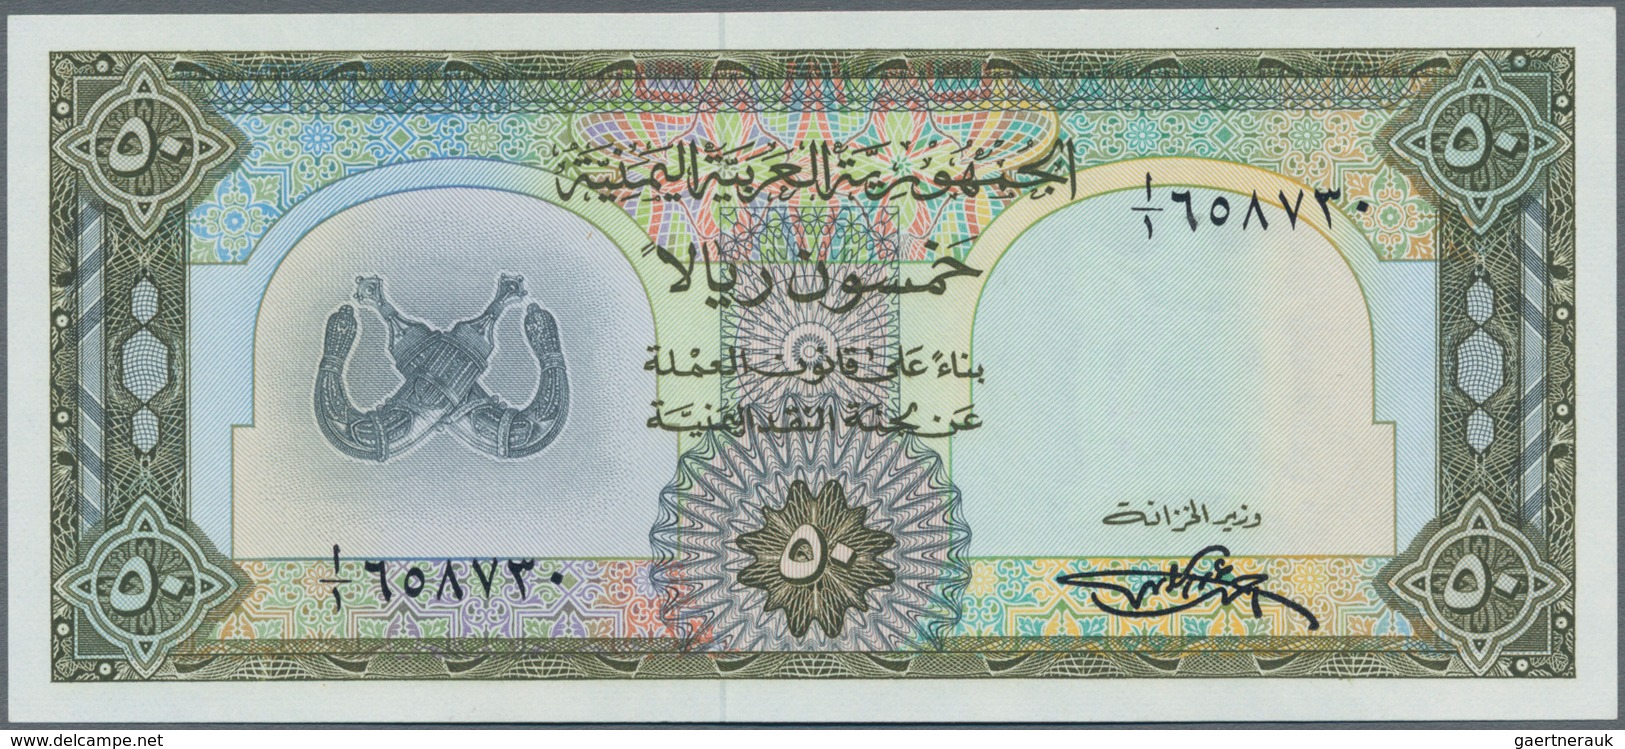 Yemen / Jemen: Arab Republic Of Yemen - Currency Board 50 Rials ND(1971), P.10 In Perfect UNC Condit - Jemen